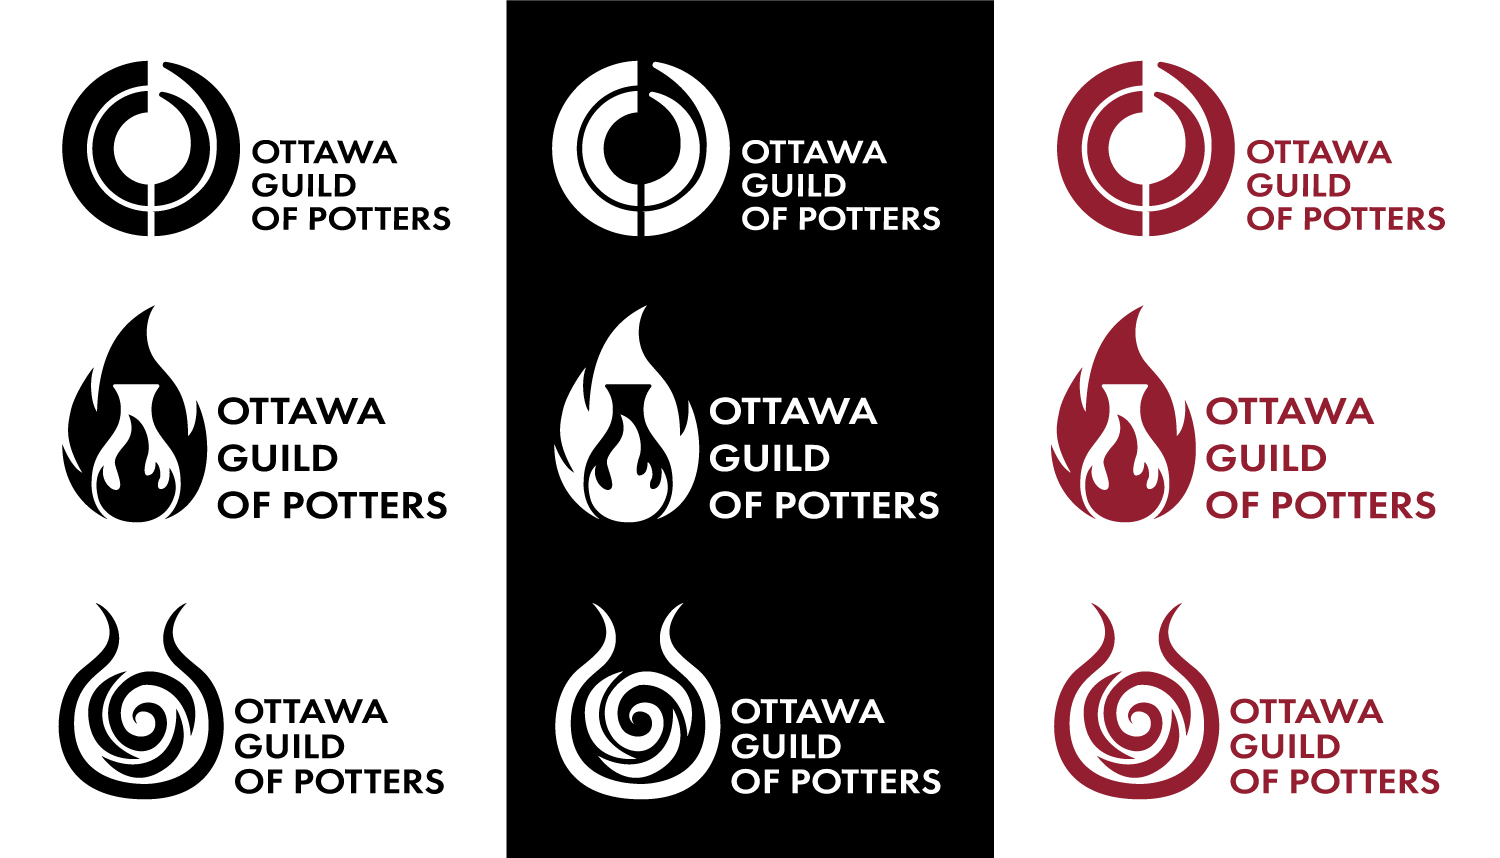 Ottawa Guild of Potters final logo designs